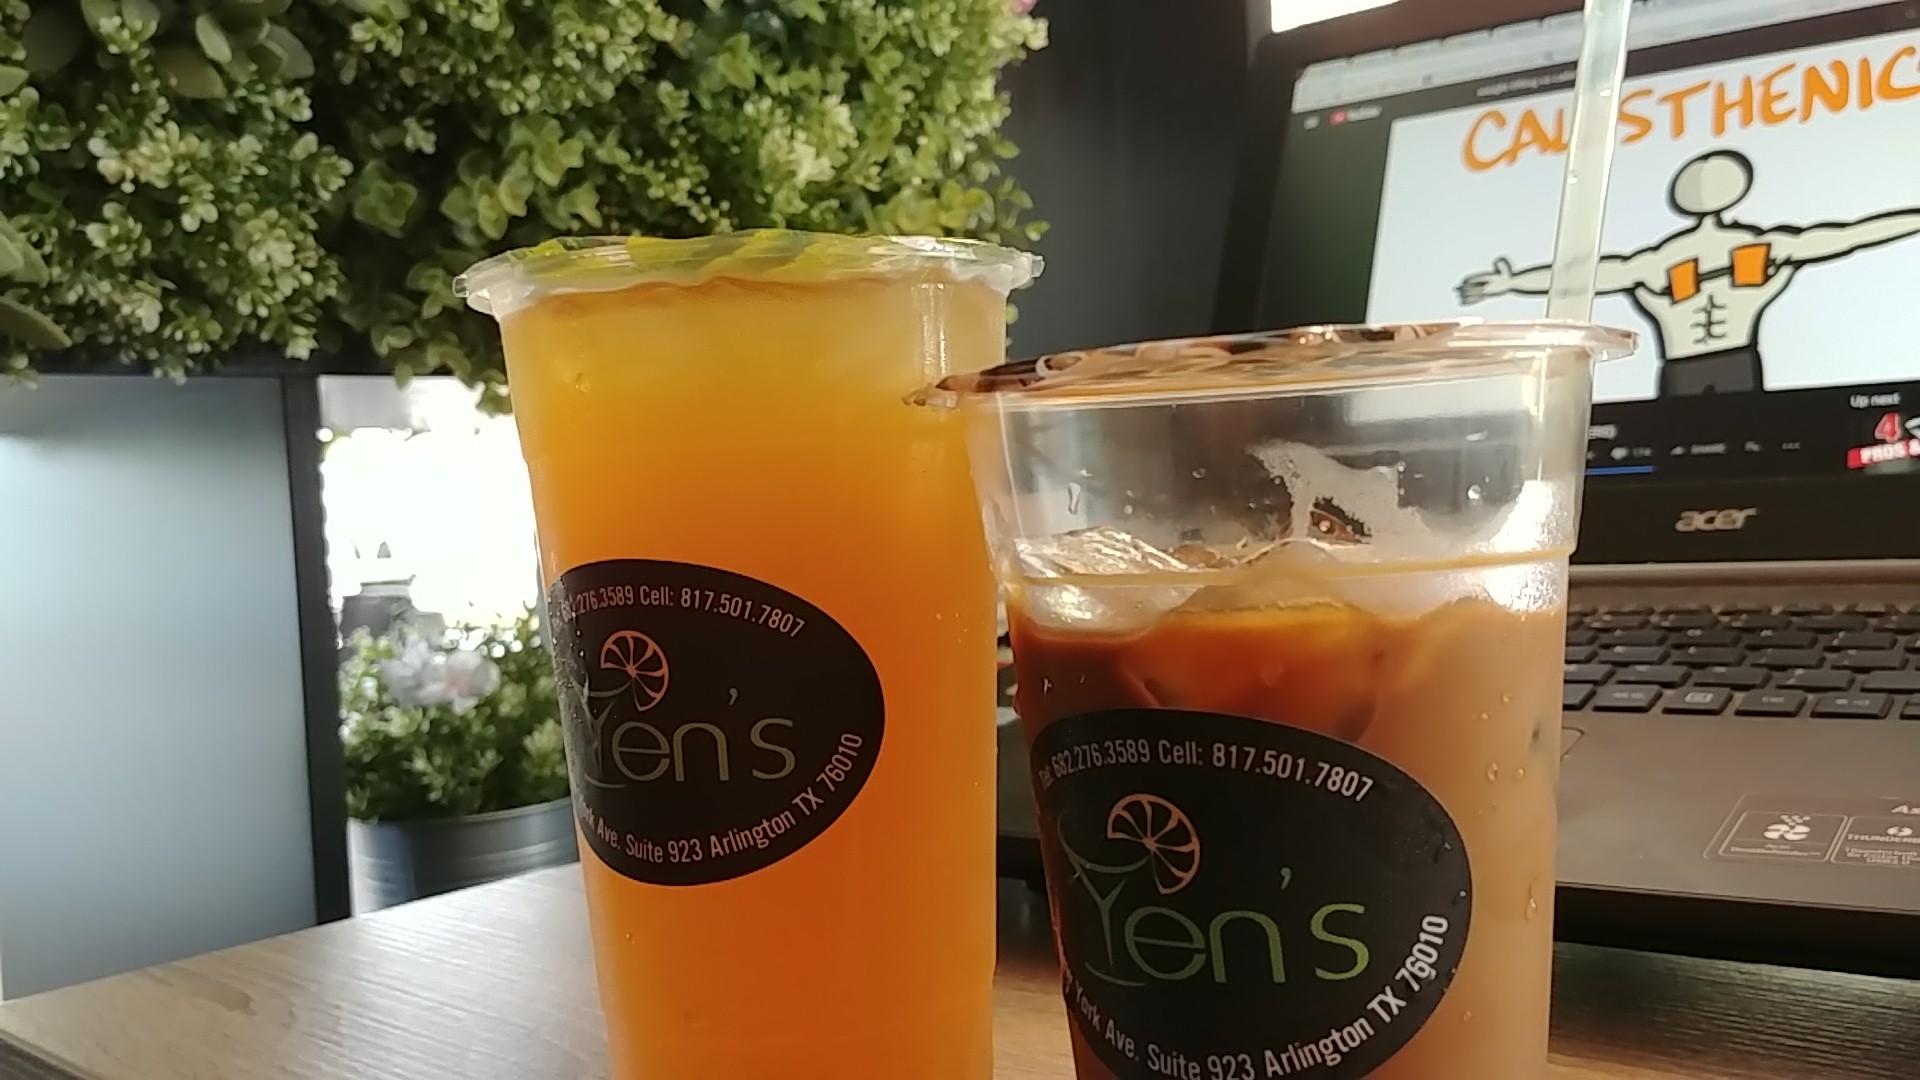 Yen's Coffee & Tea